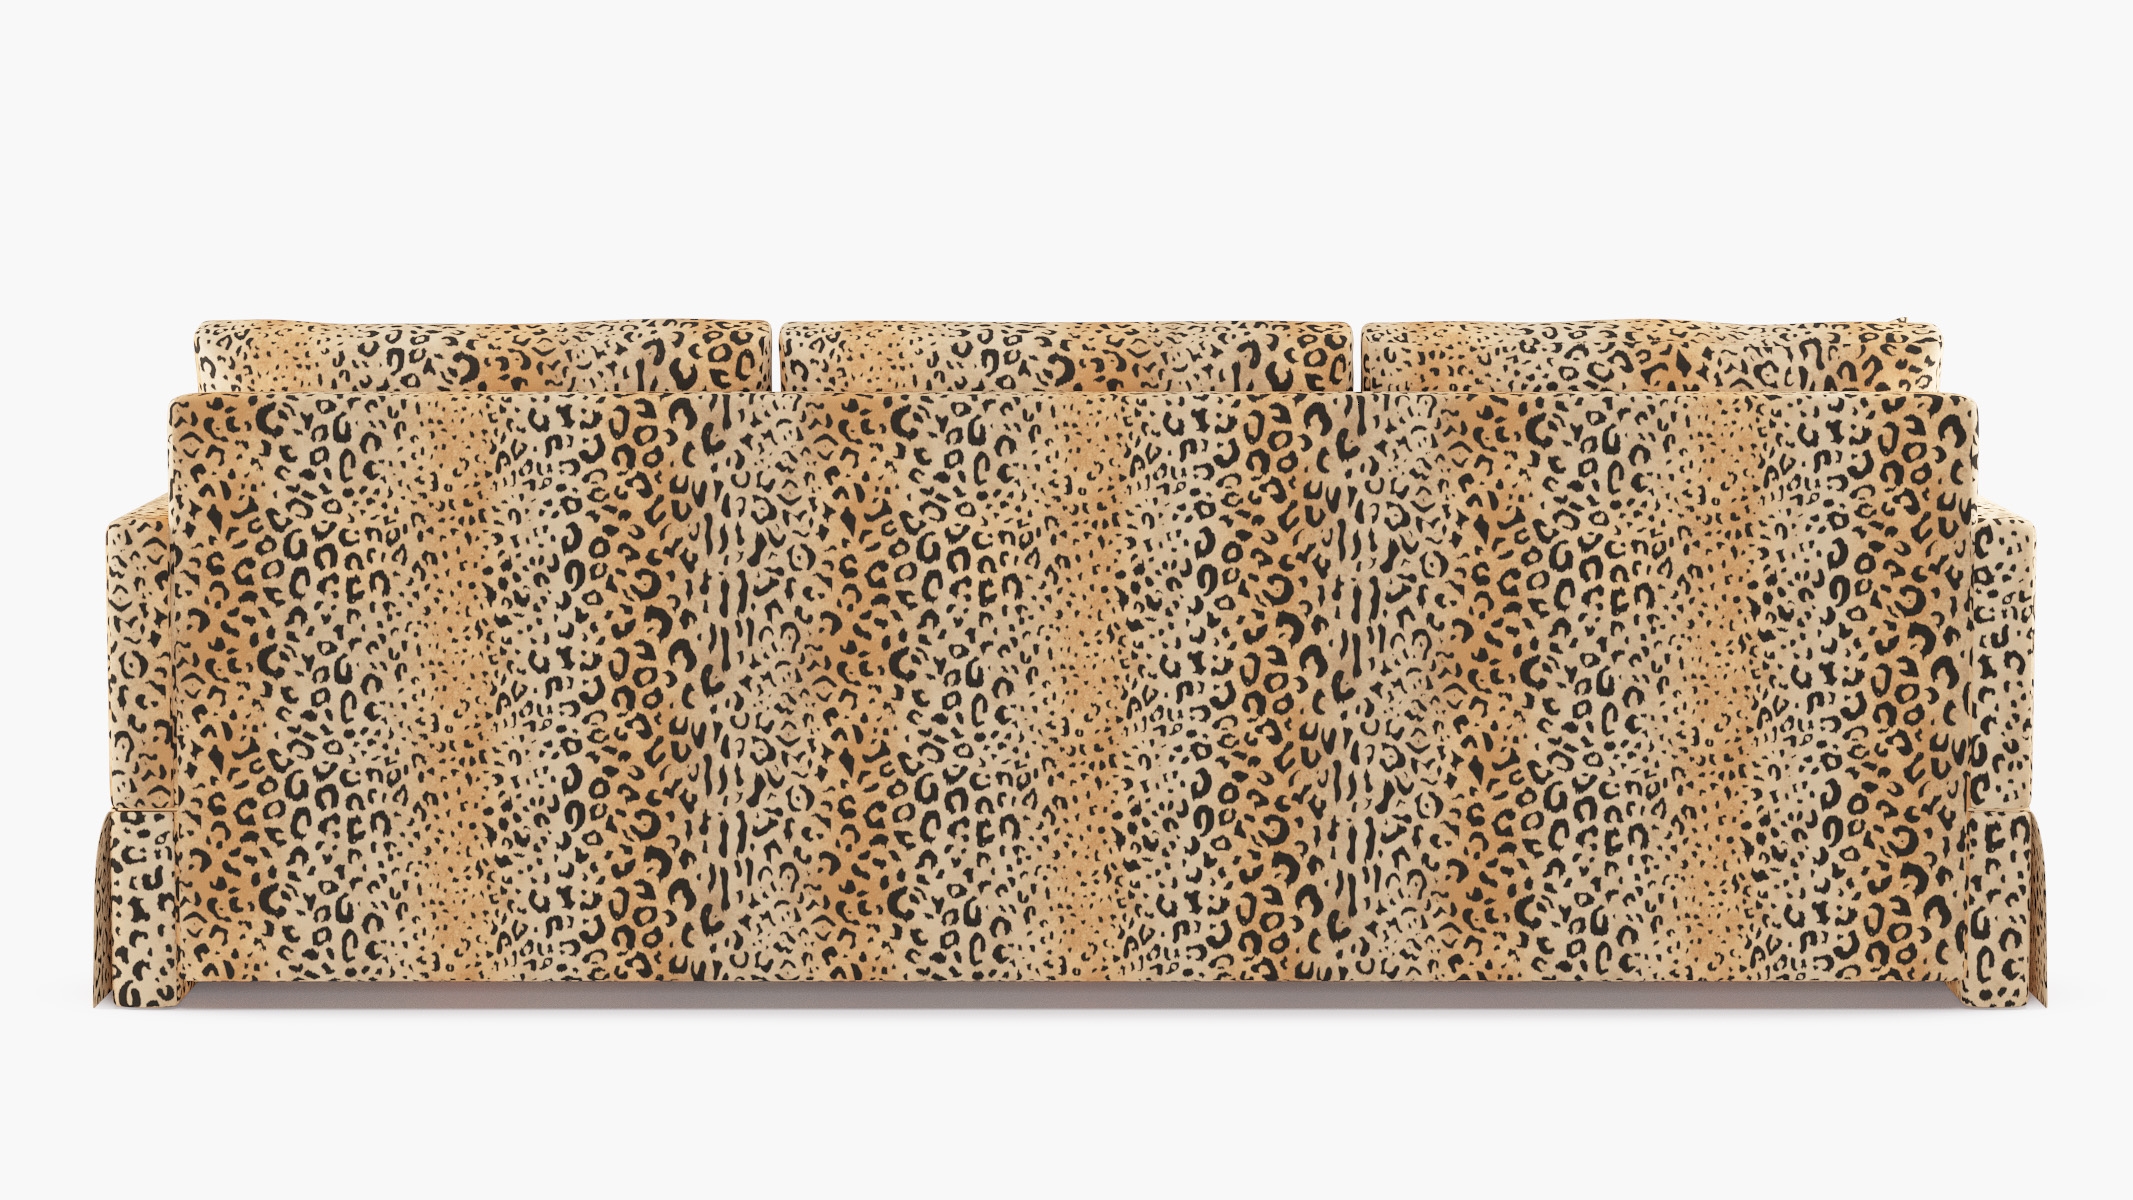 Skirted Track Arm Sofa, Leopard, Extra Deep (43") - Image 3